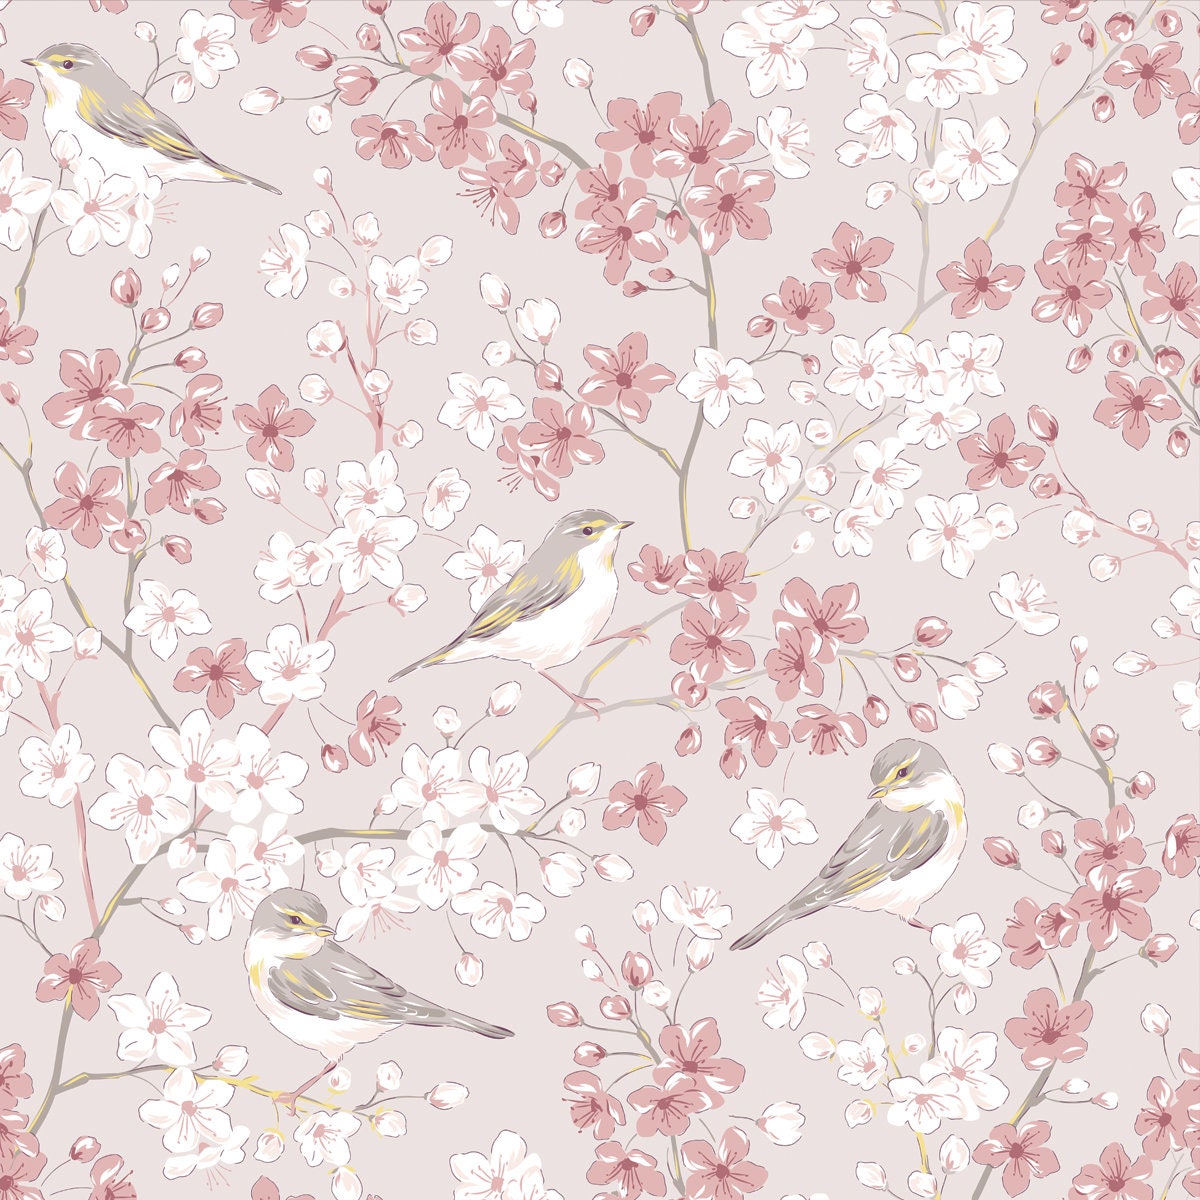 Willow Warbler Bird in Spring Sakura Cherry Blossom Garden. Vintage Romantic Nature Hand Drawn Print Wallpaper Dining Room Mural